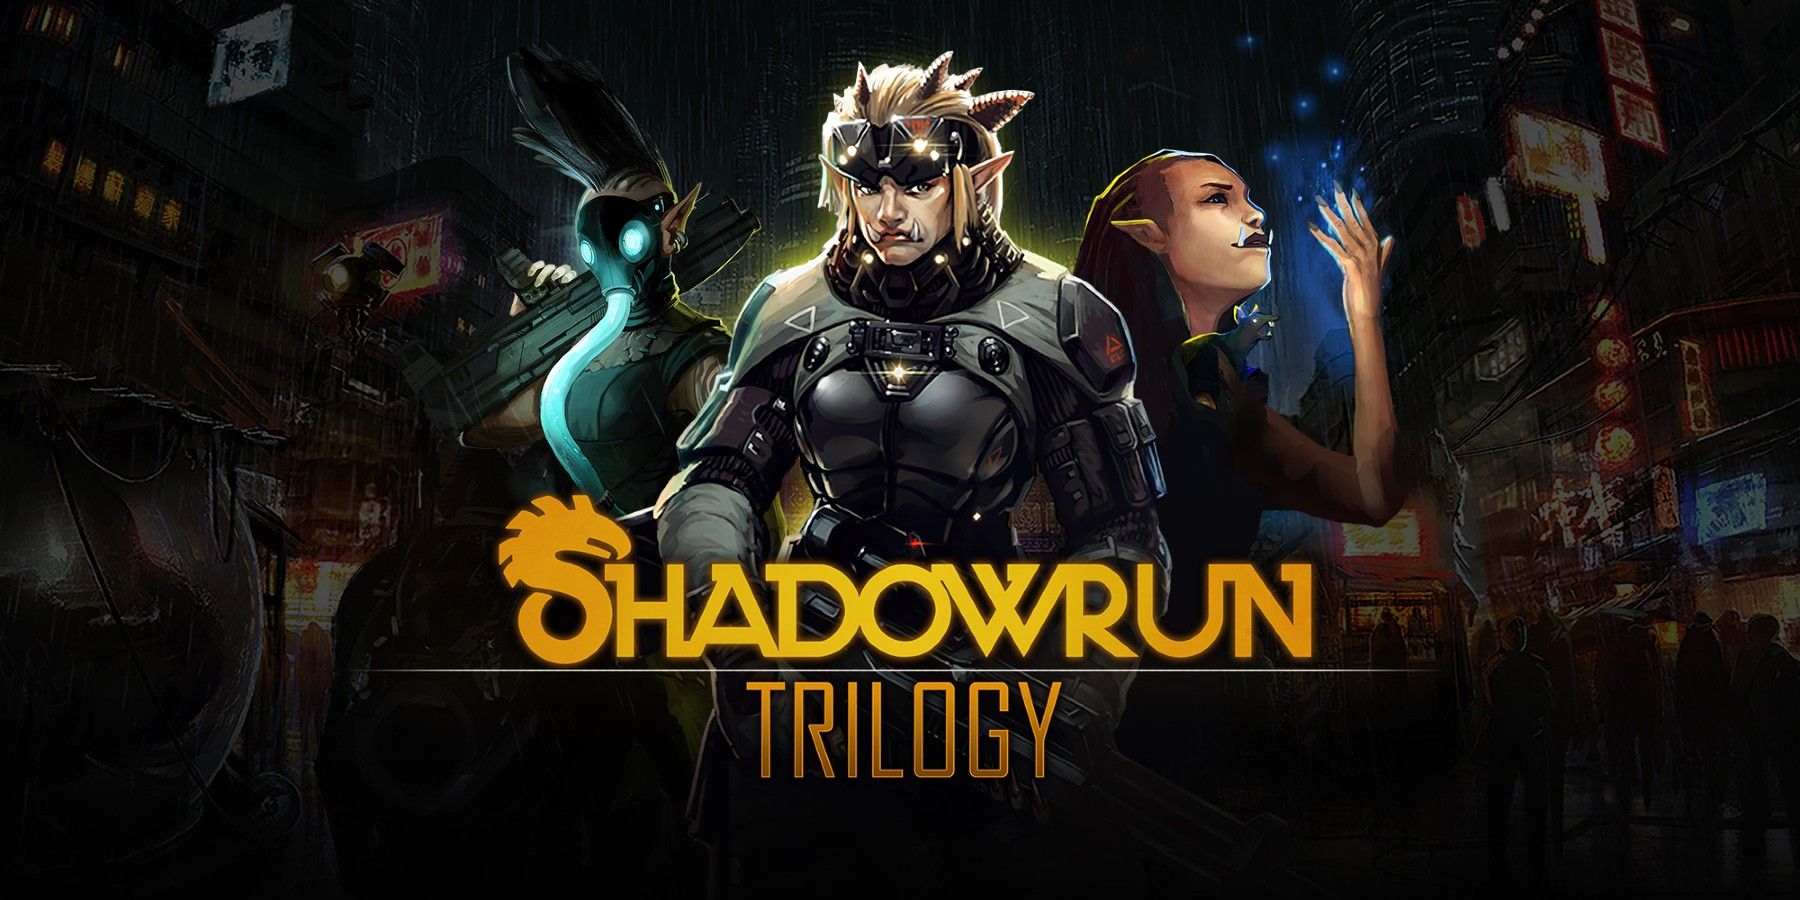 Shadowrun: Dragonfall - Original SNES version is being recreated